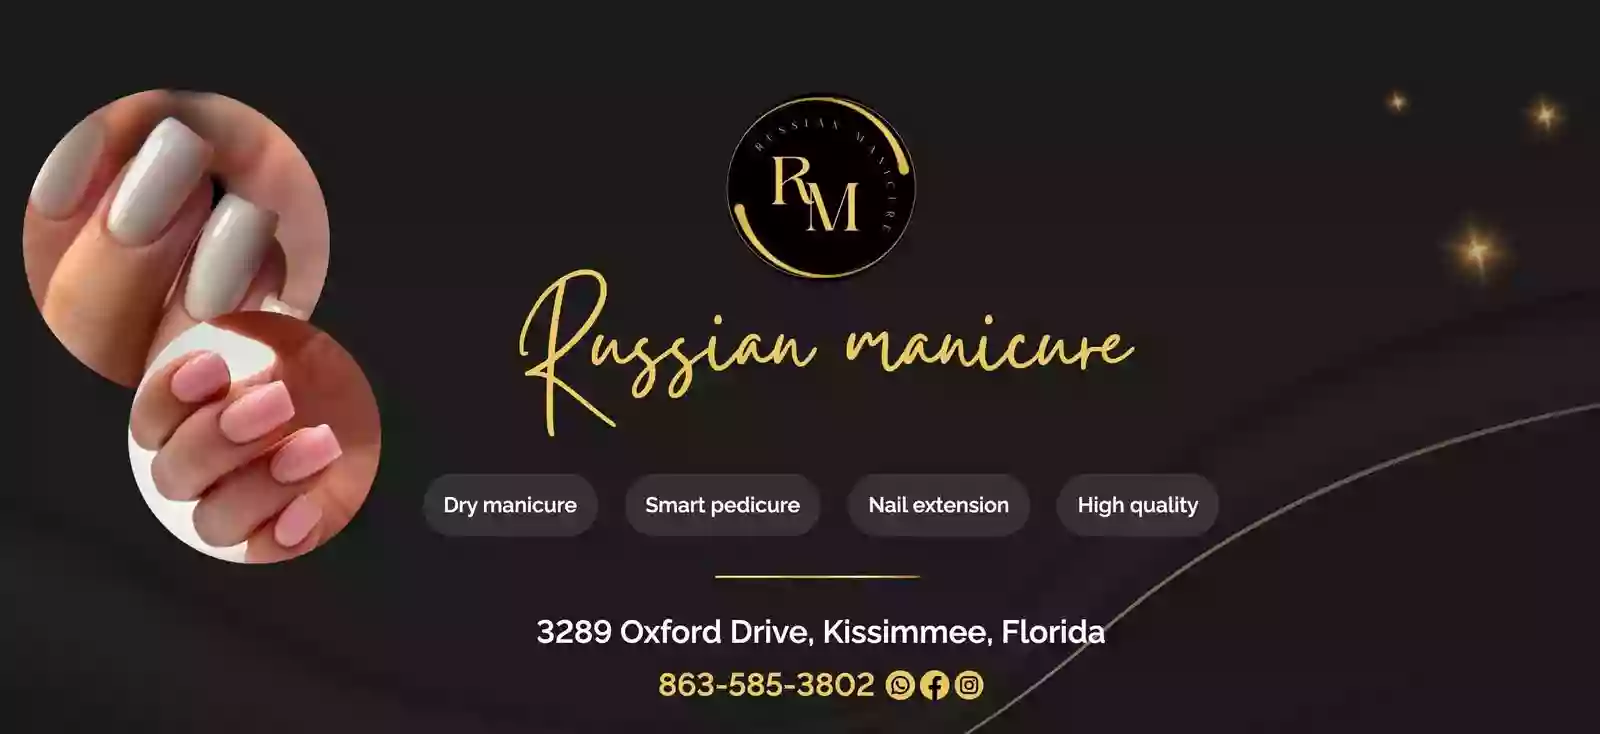 Russian Manicure